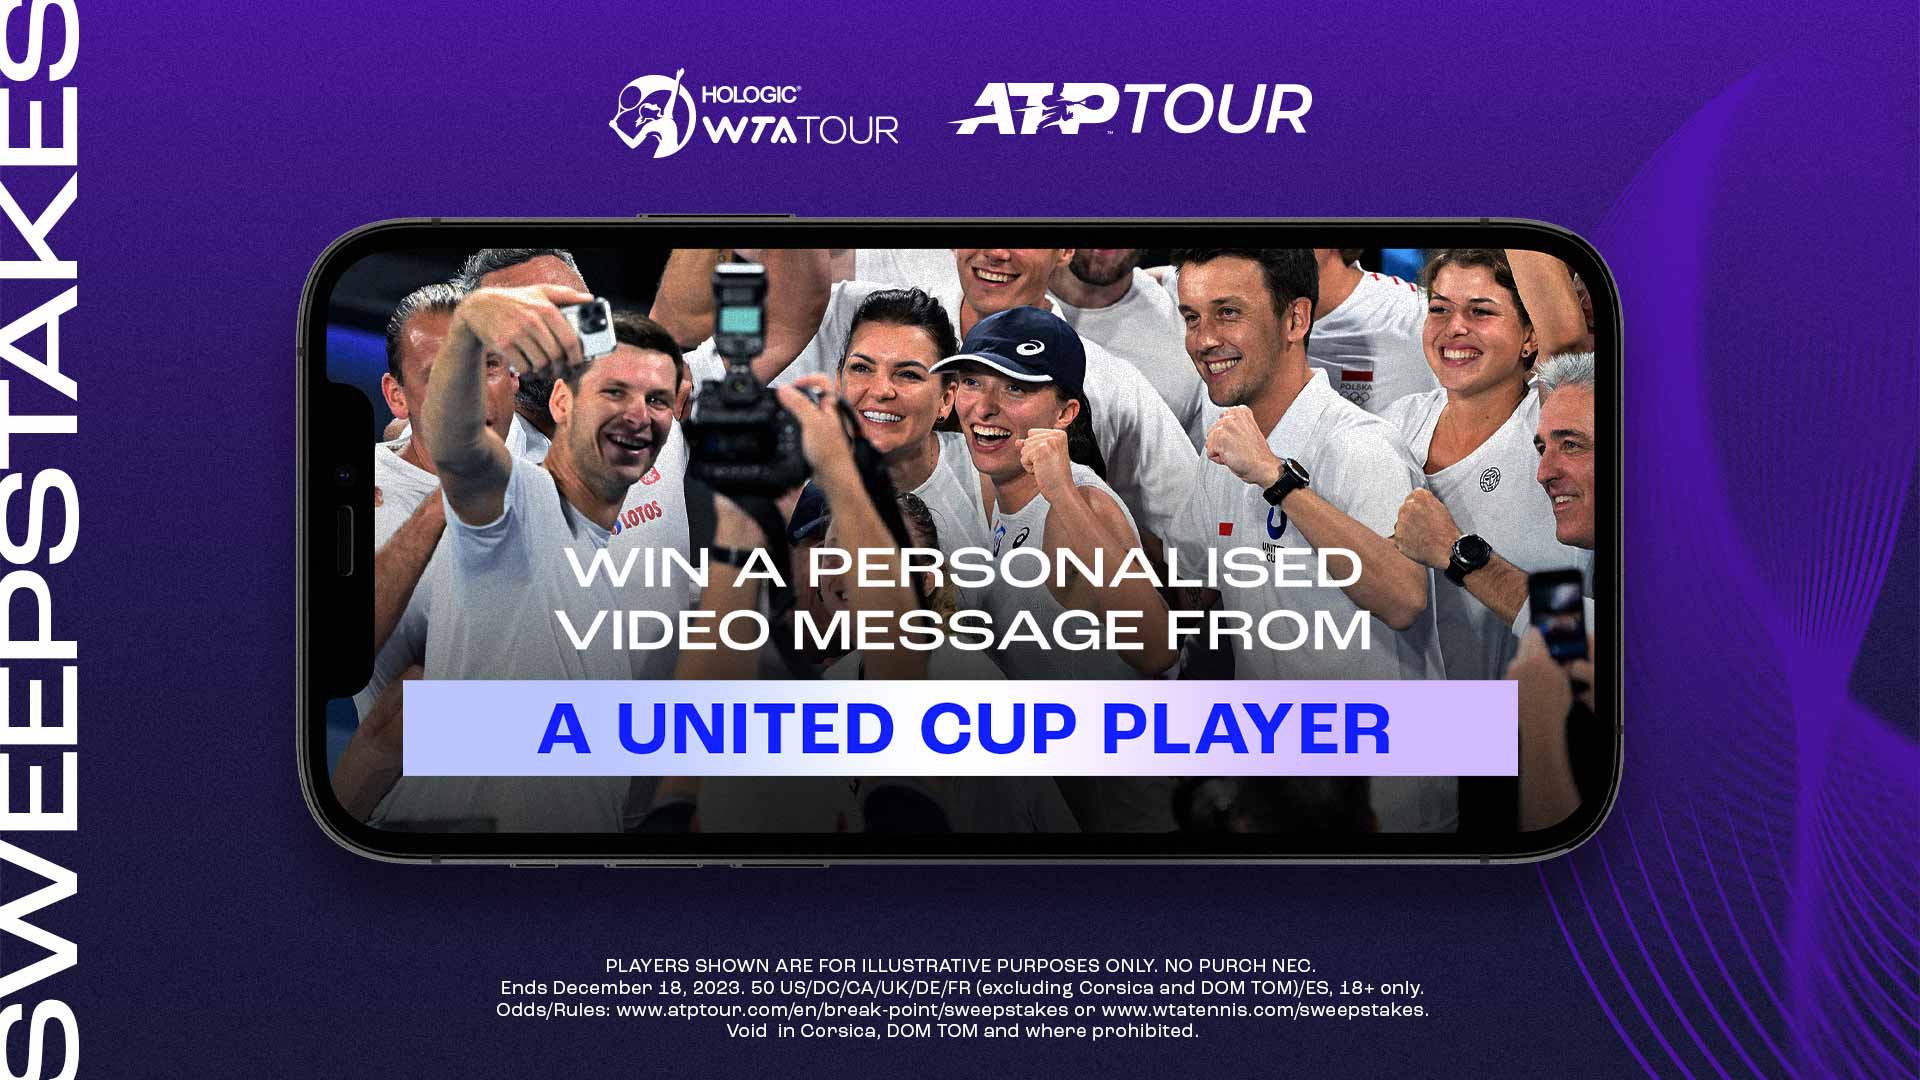 News - ATP and WTA New Live Score App